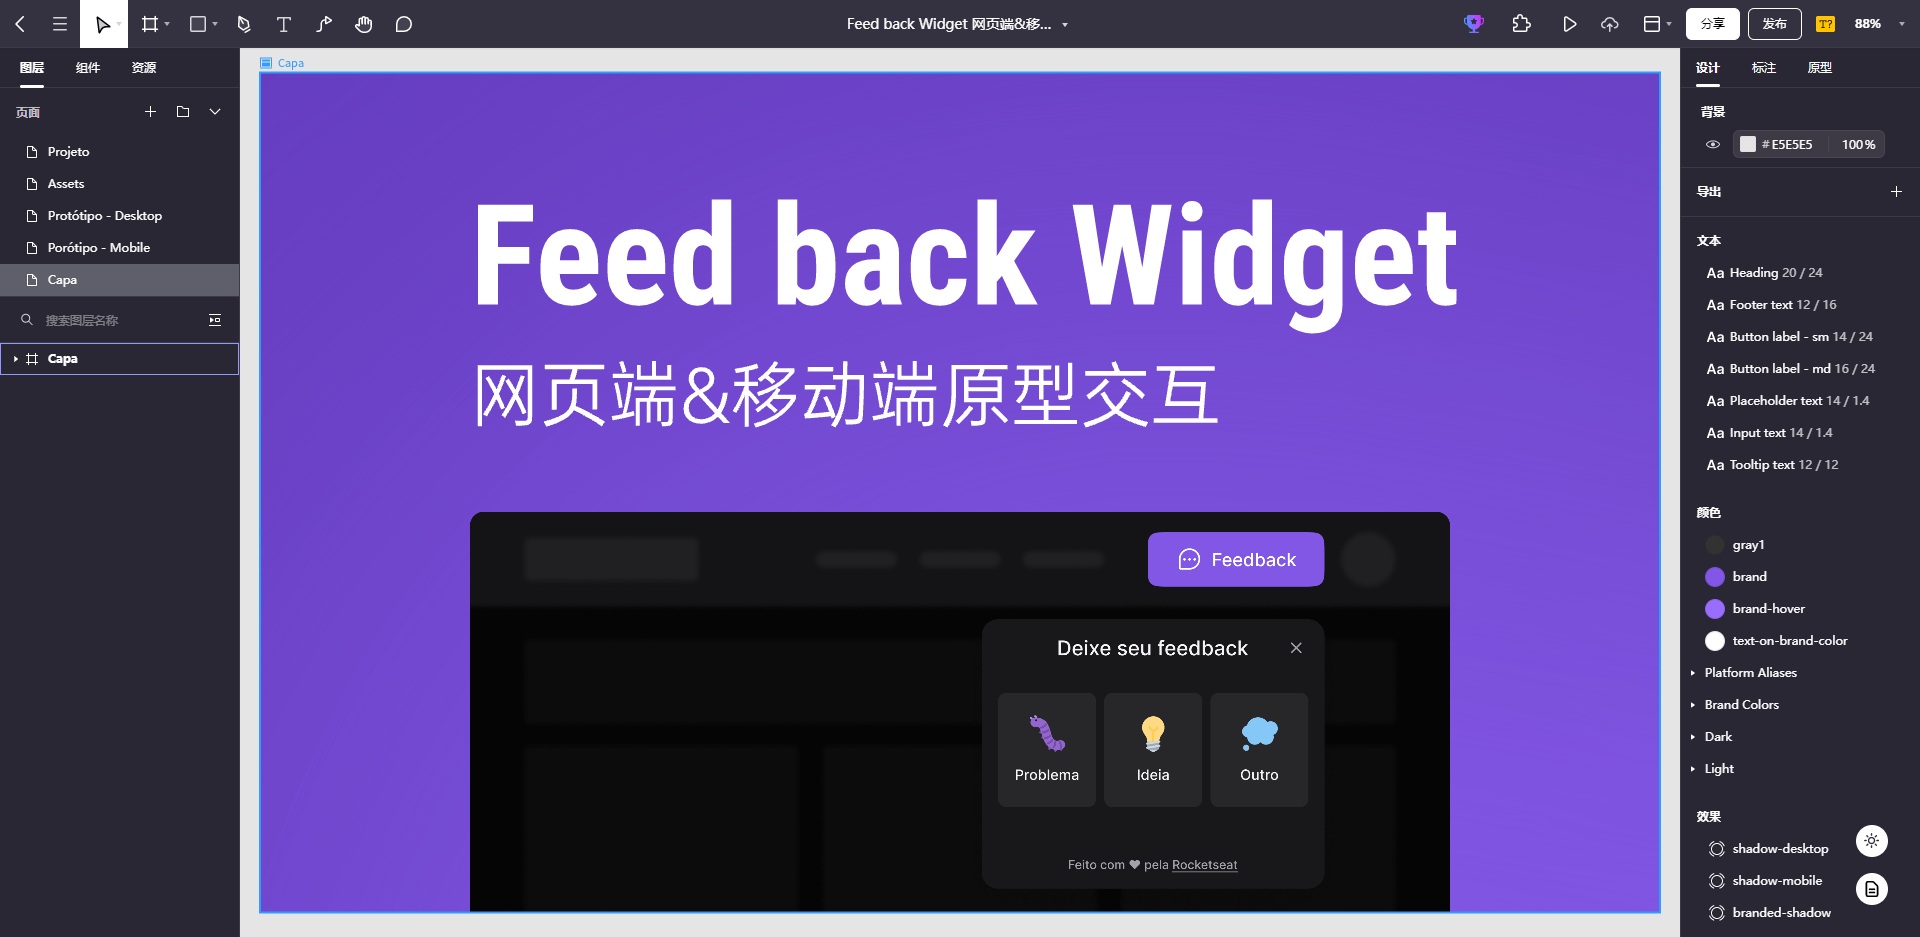 Feed back widget